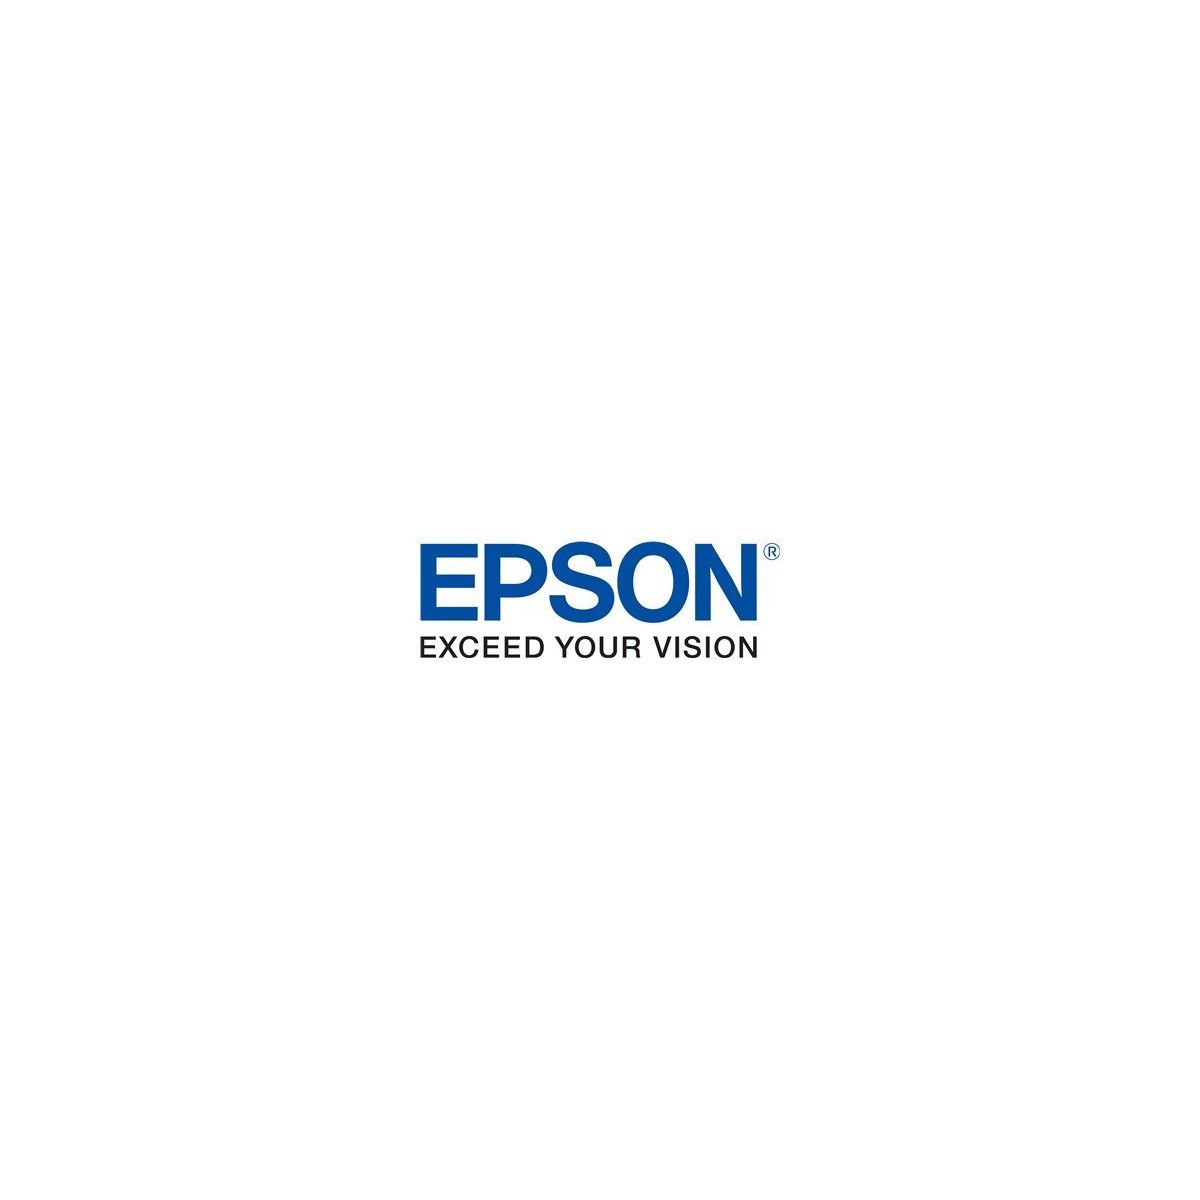 Epson MFP Scanner stand 44 - Floor - White - China - - SureColor SC-T7200D-PS - SureColor SC-T7200D - SureColor SC-T7200-PS - Su